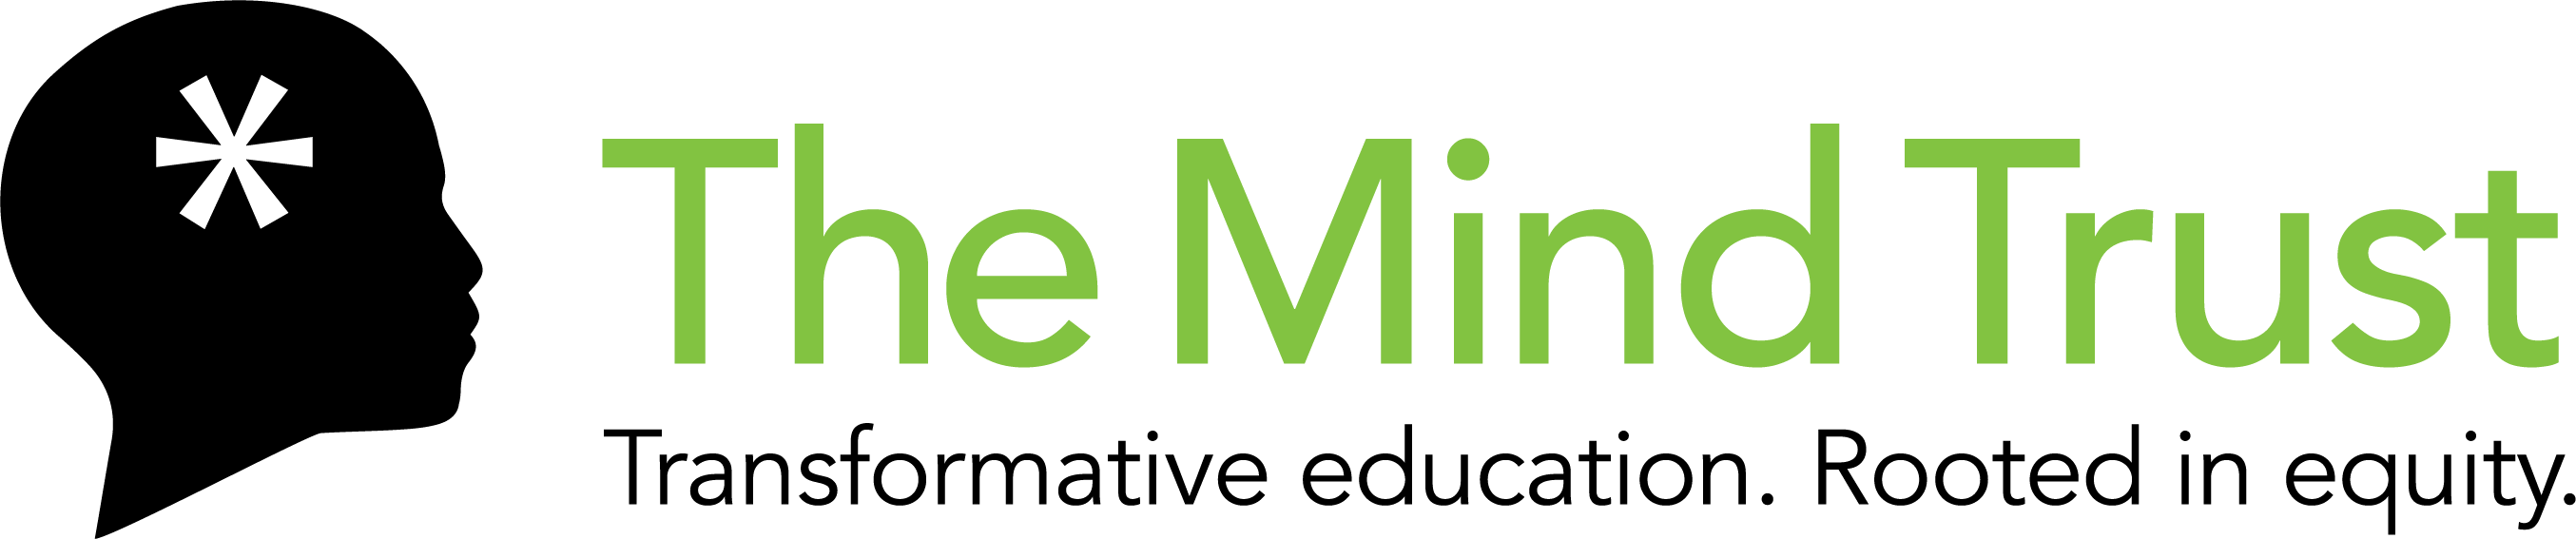 The Mind Trust logo (opens in new window)